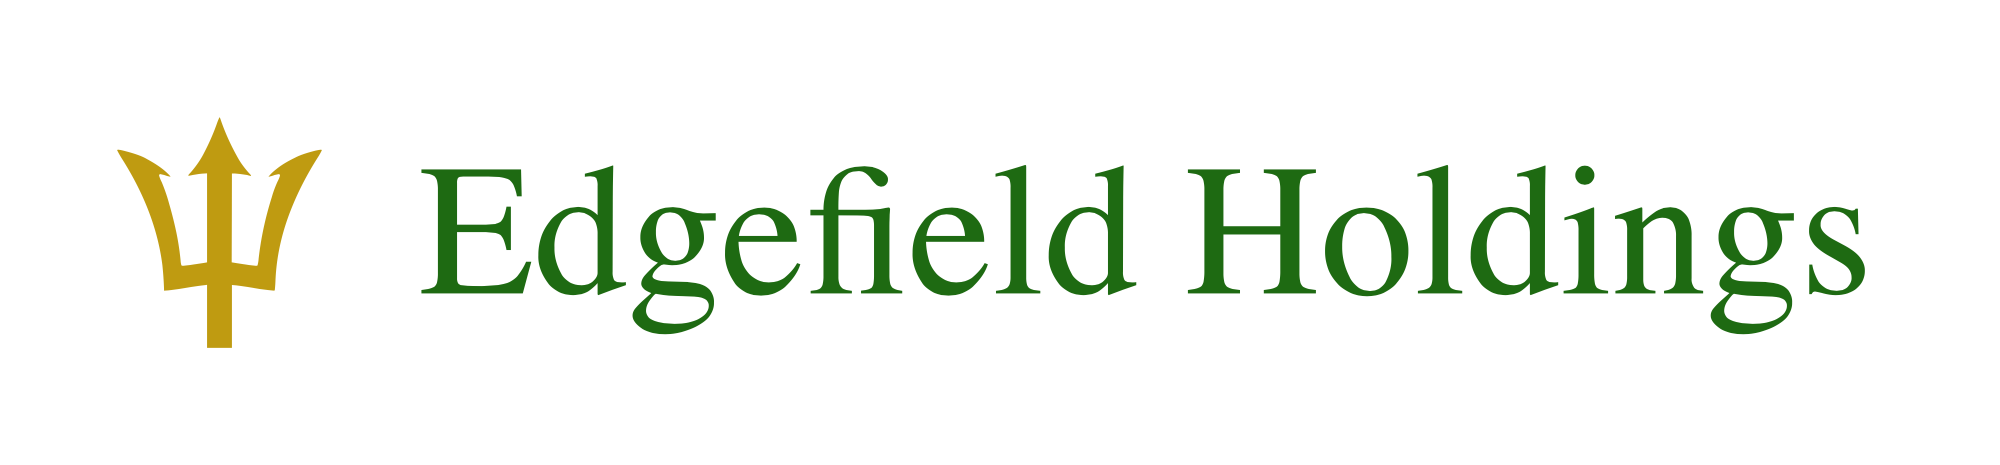 Edgefield Holdings